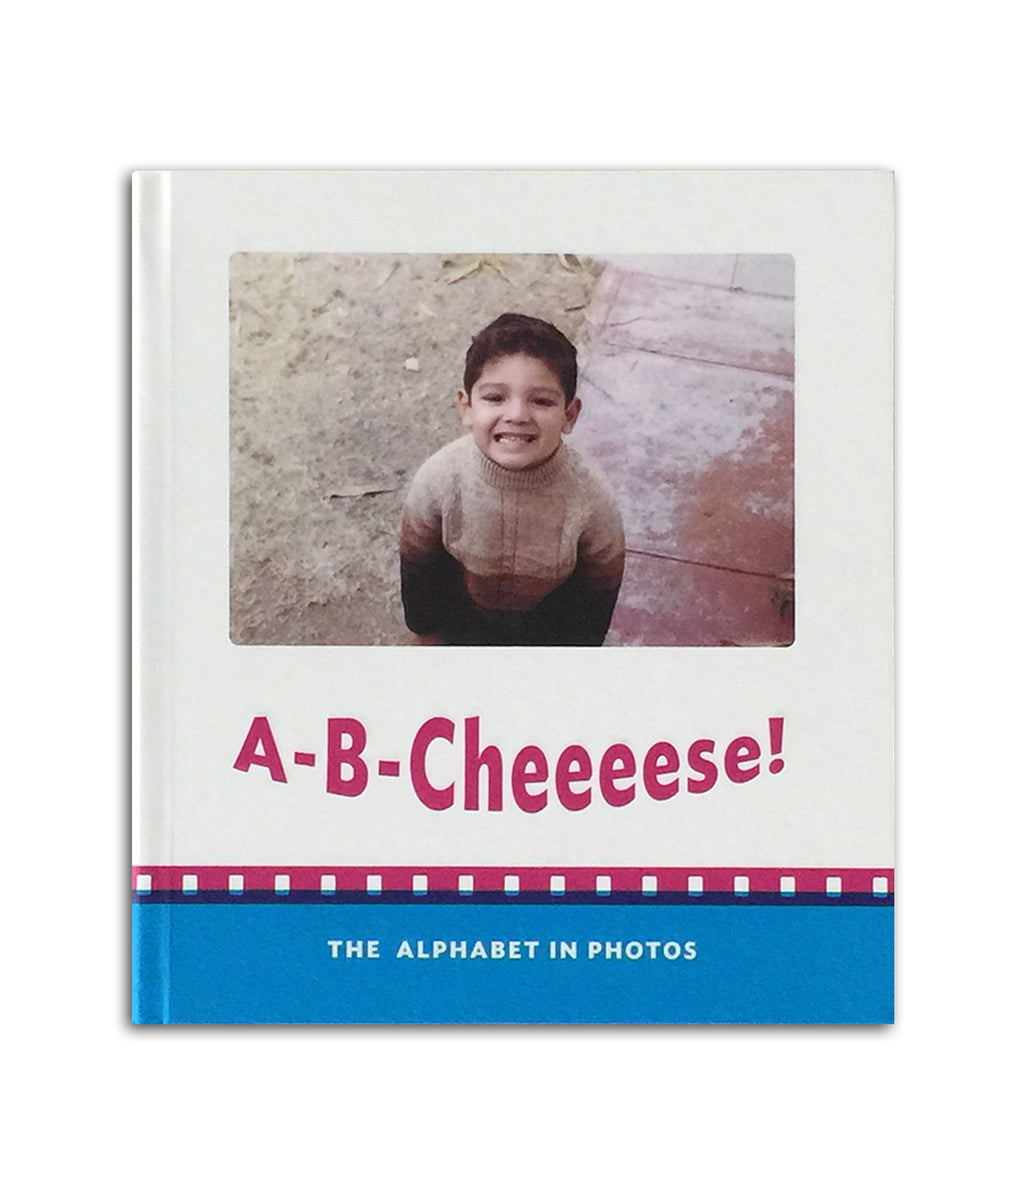 A-B-Cheeeese!